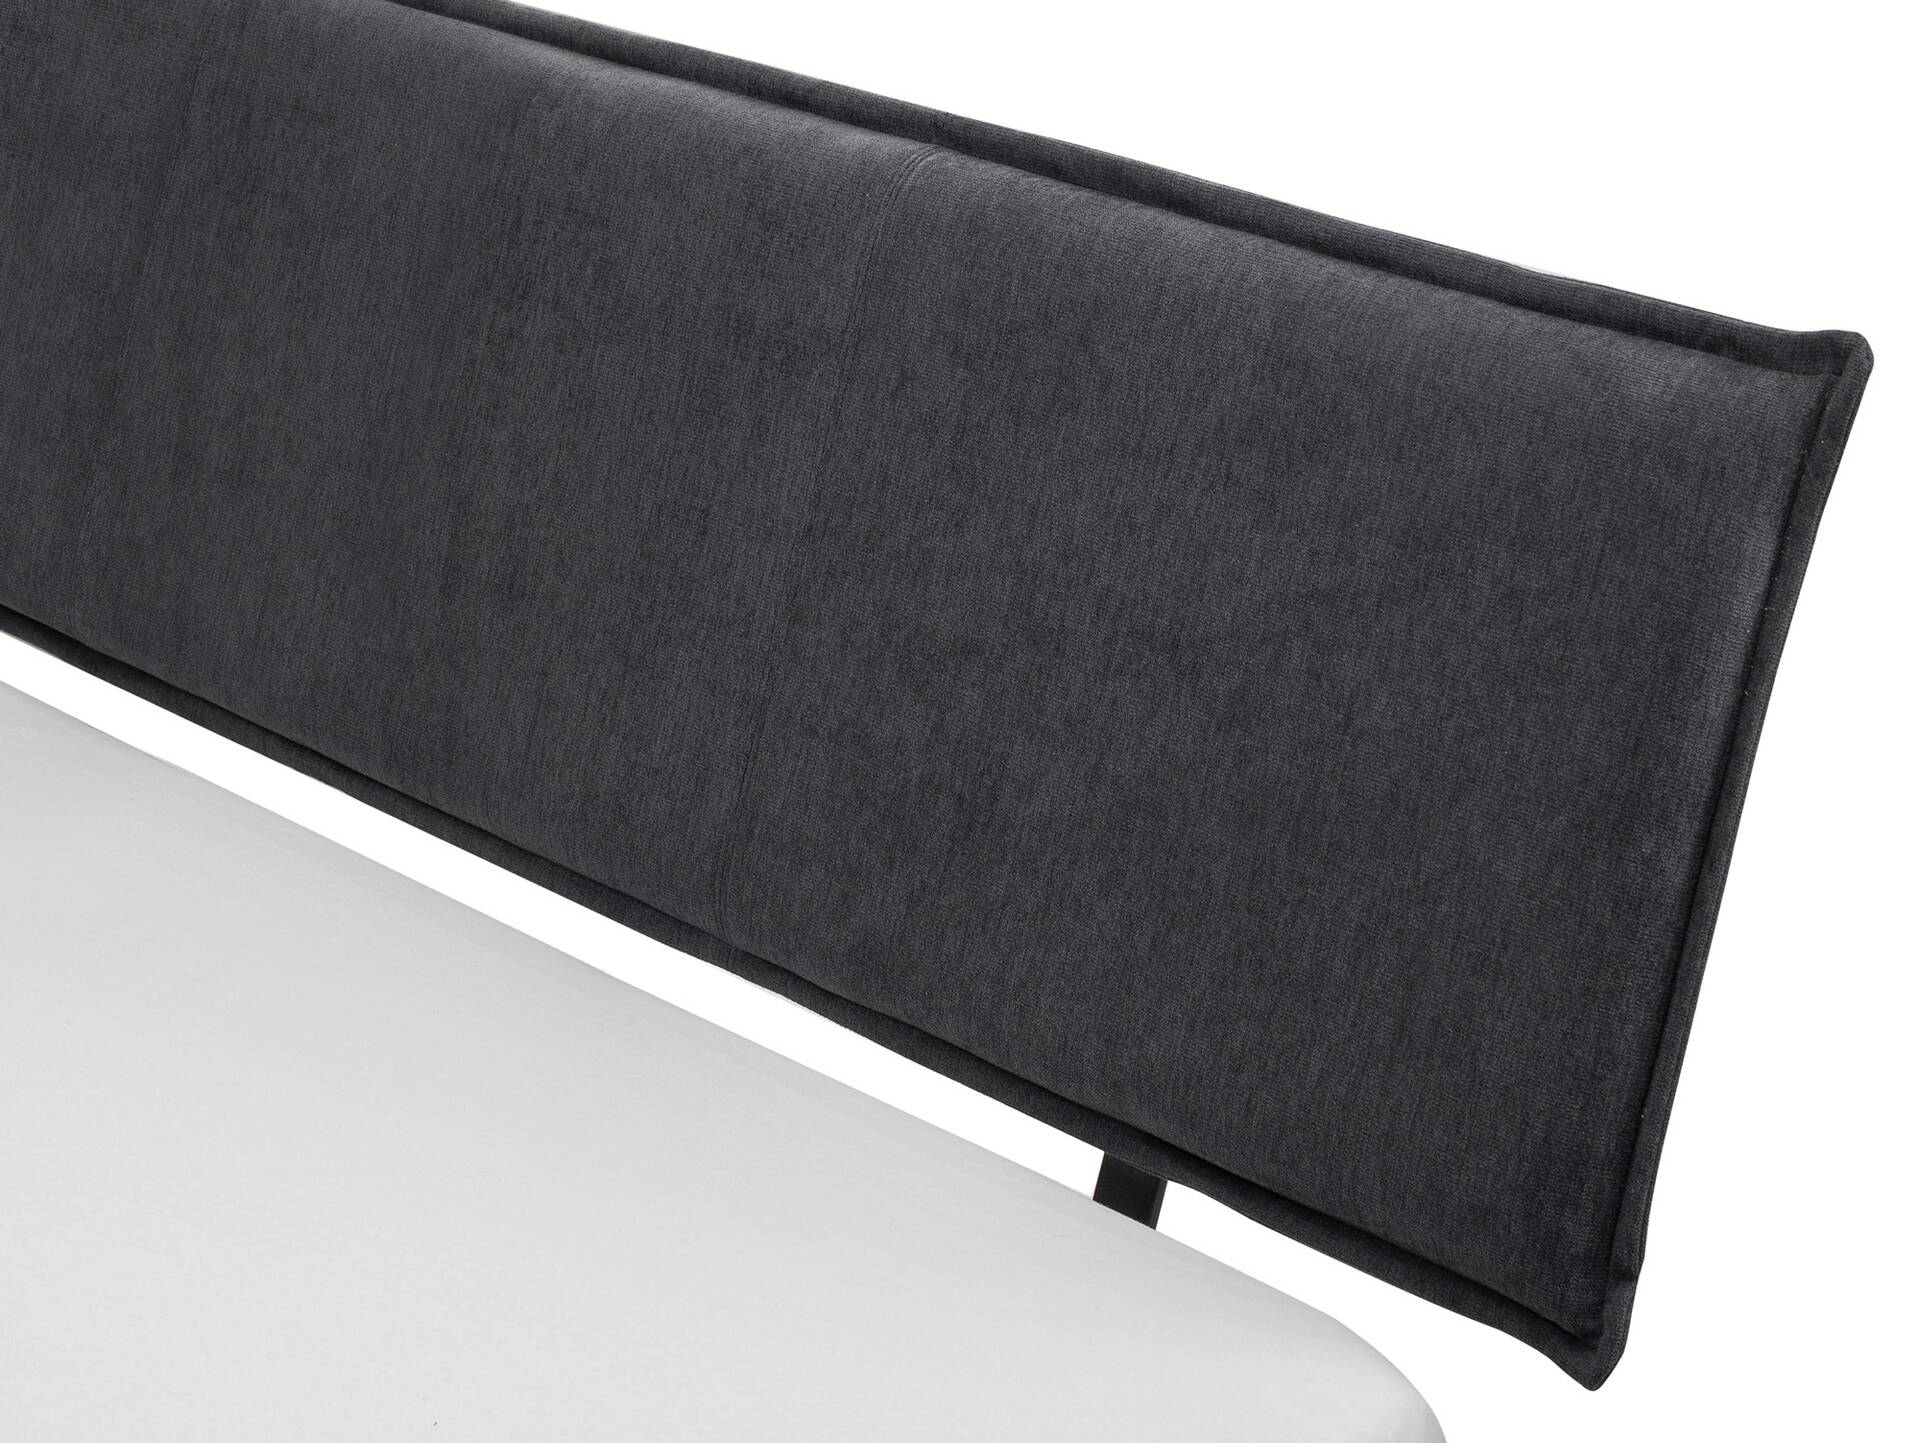 CALIDO 4-Fuß-Bett mit Polster-Kopfteil, Material Massivholz 120 x 200 cm | Buche weiss lackiert | Stoff Anthrazit | Komforthöhe